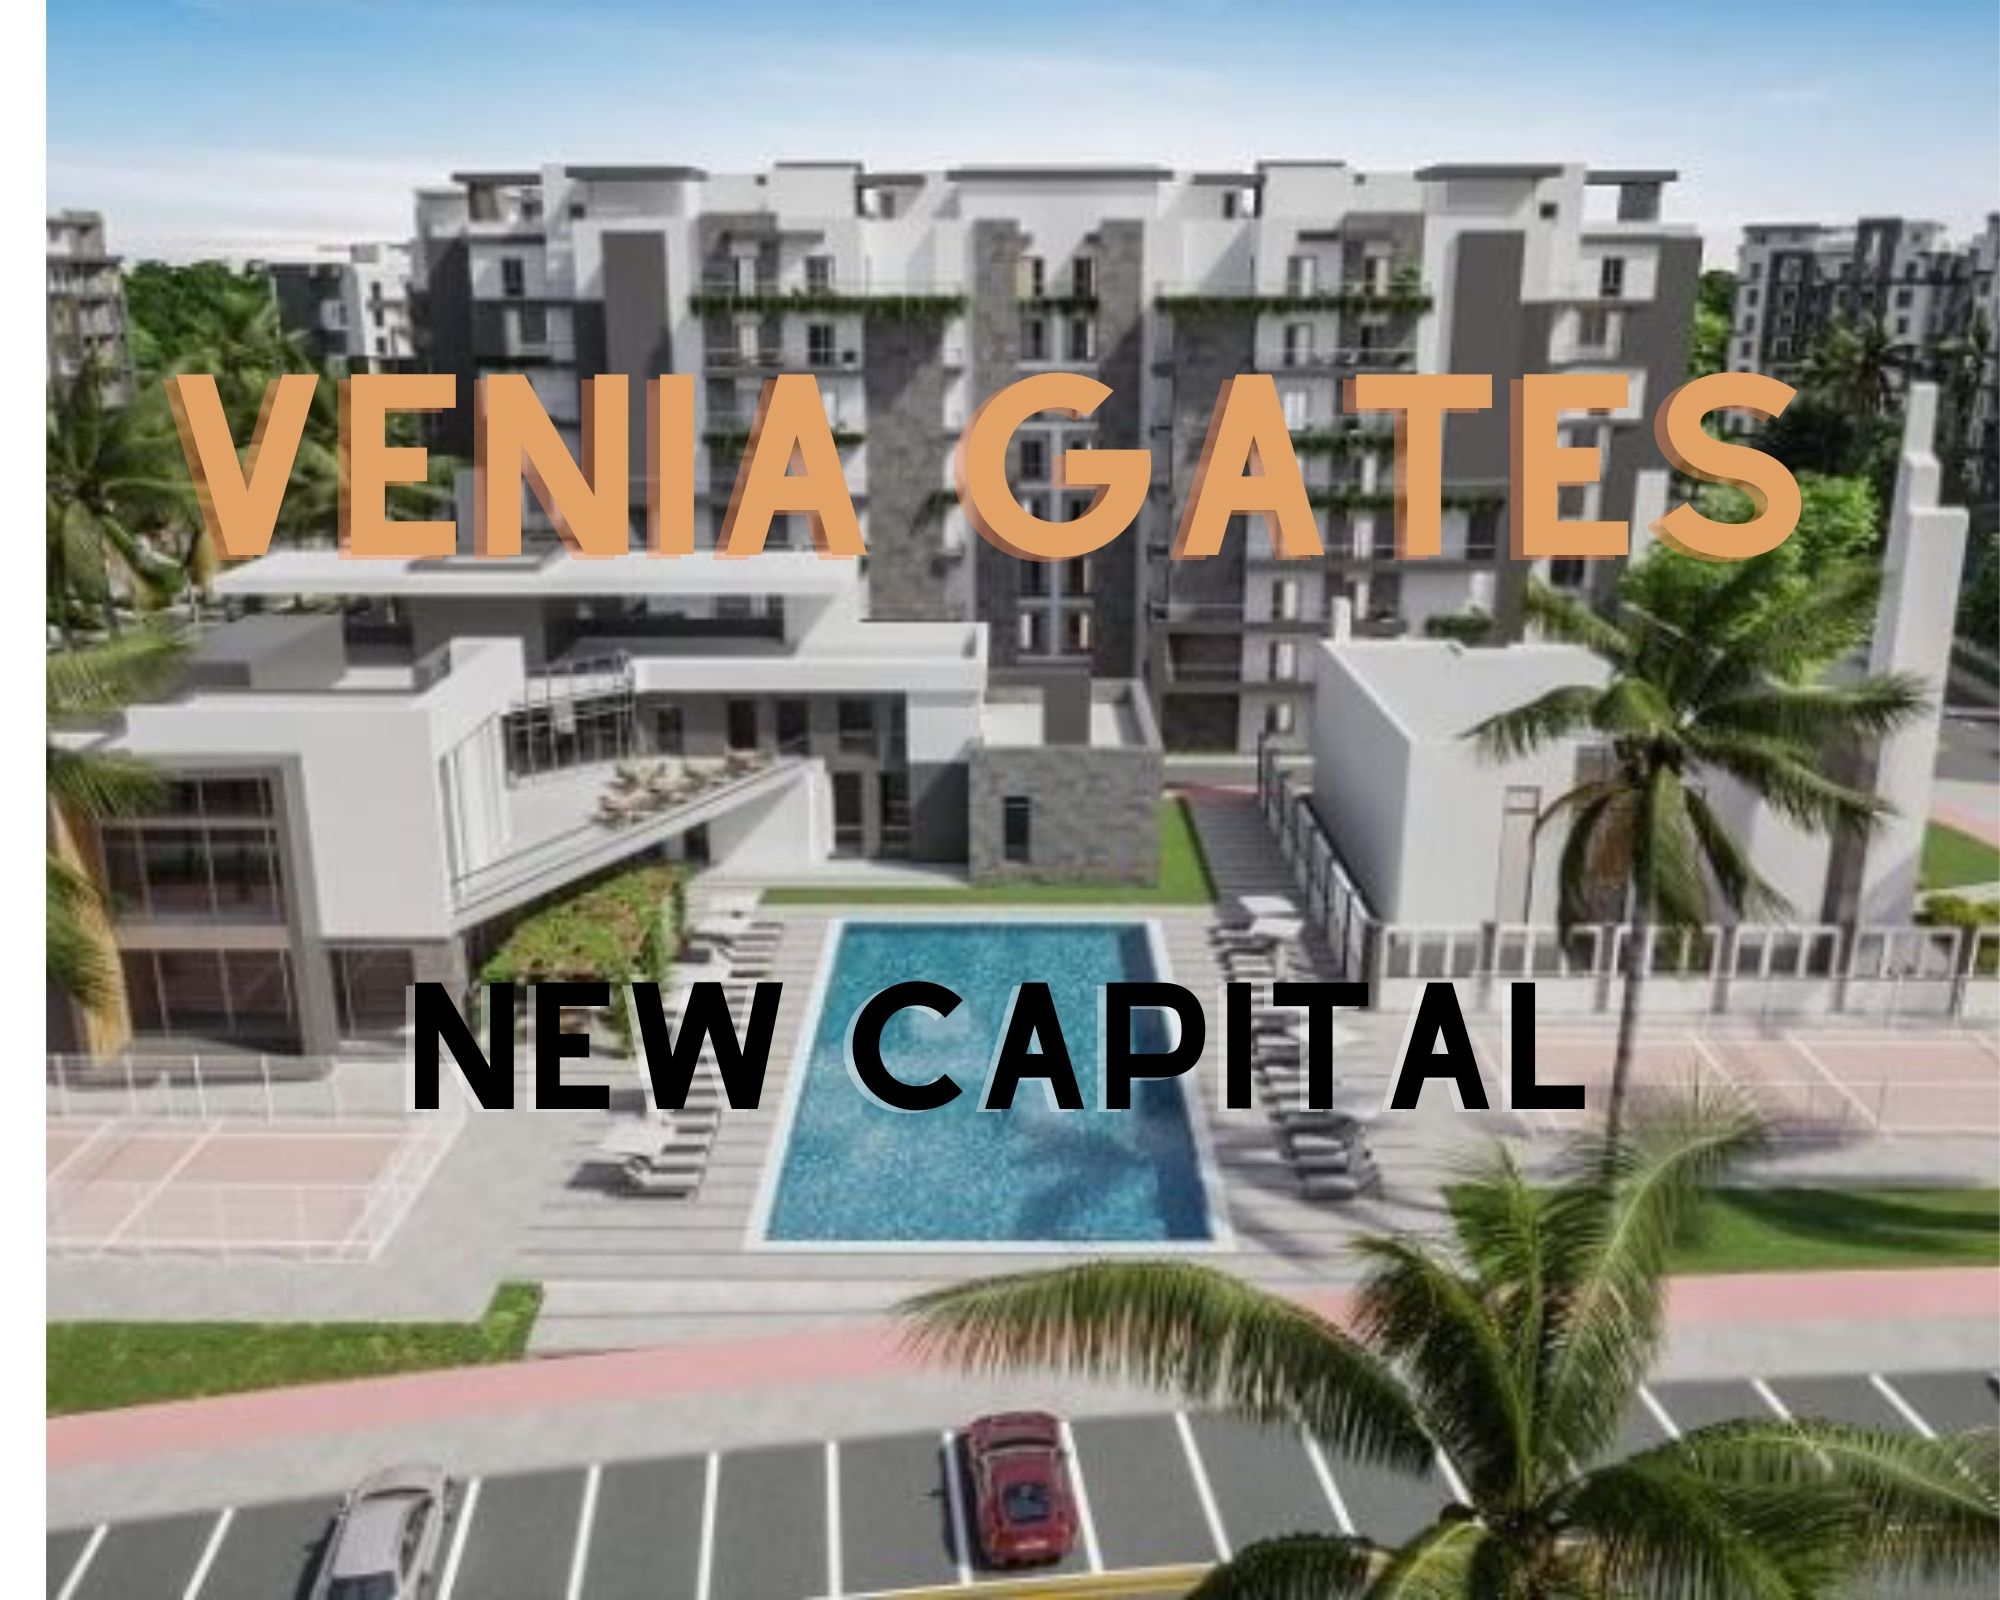 Venia Gates New Capital